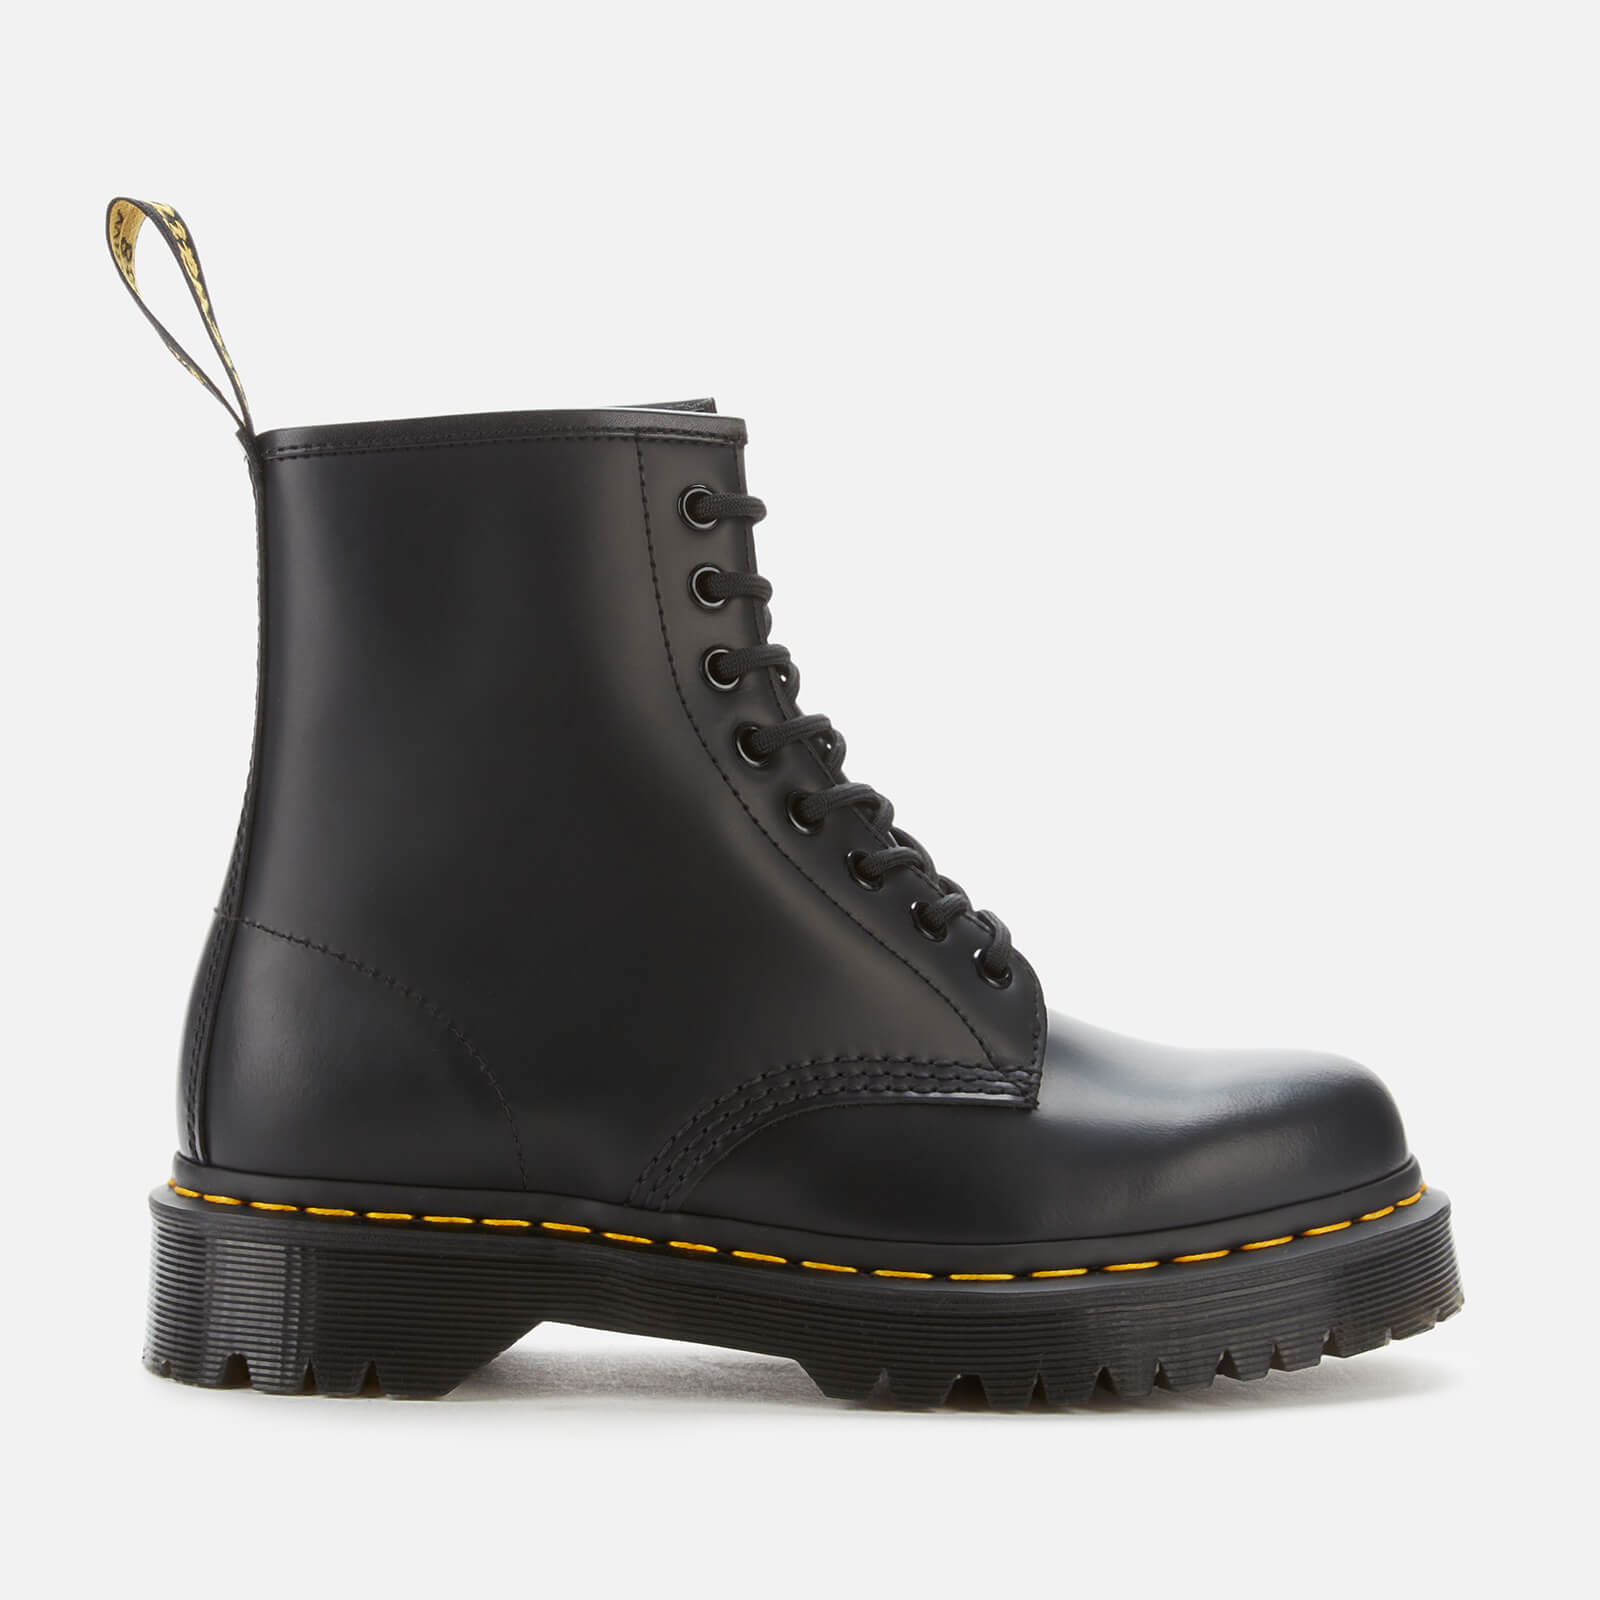 Dr. Martens 1460 Bex Smooth Leather 8-Eye Boots - Black - UK 3 | Allsole